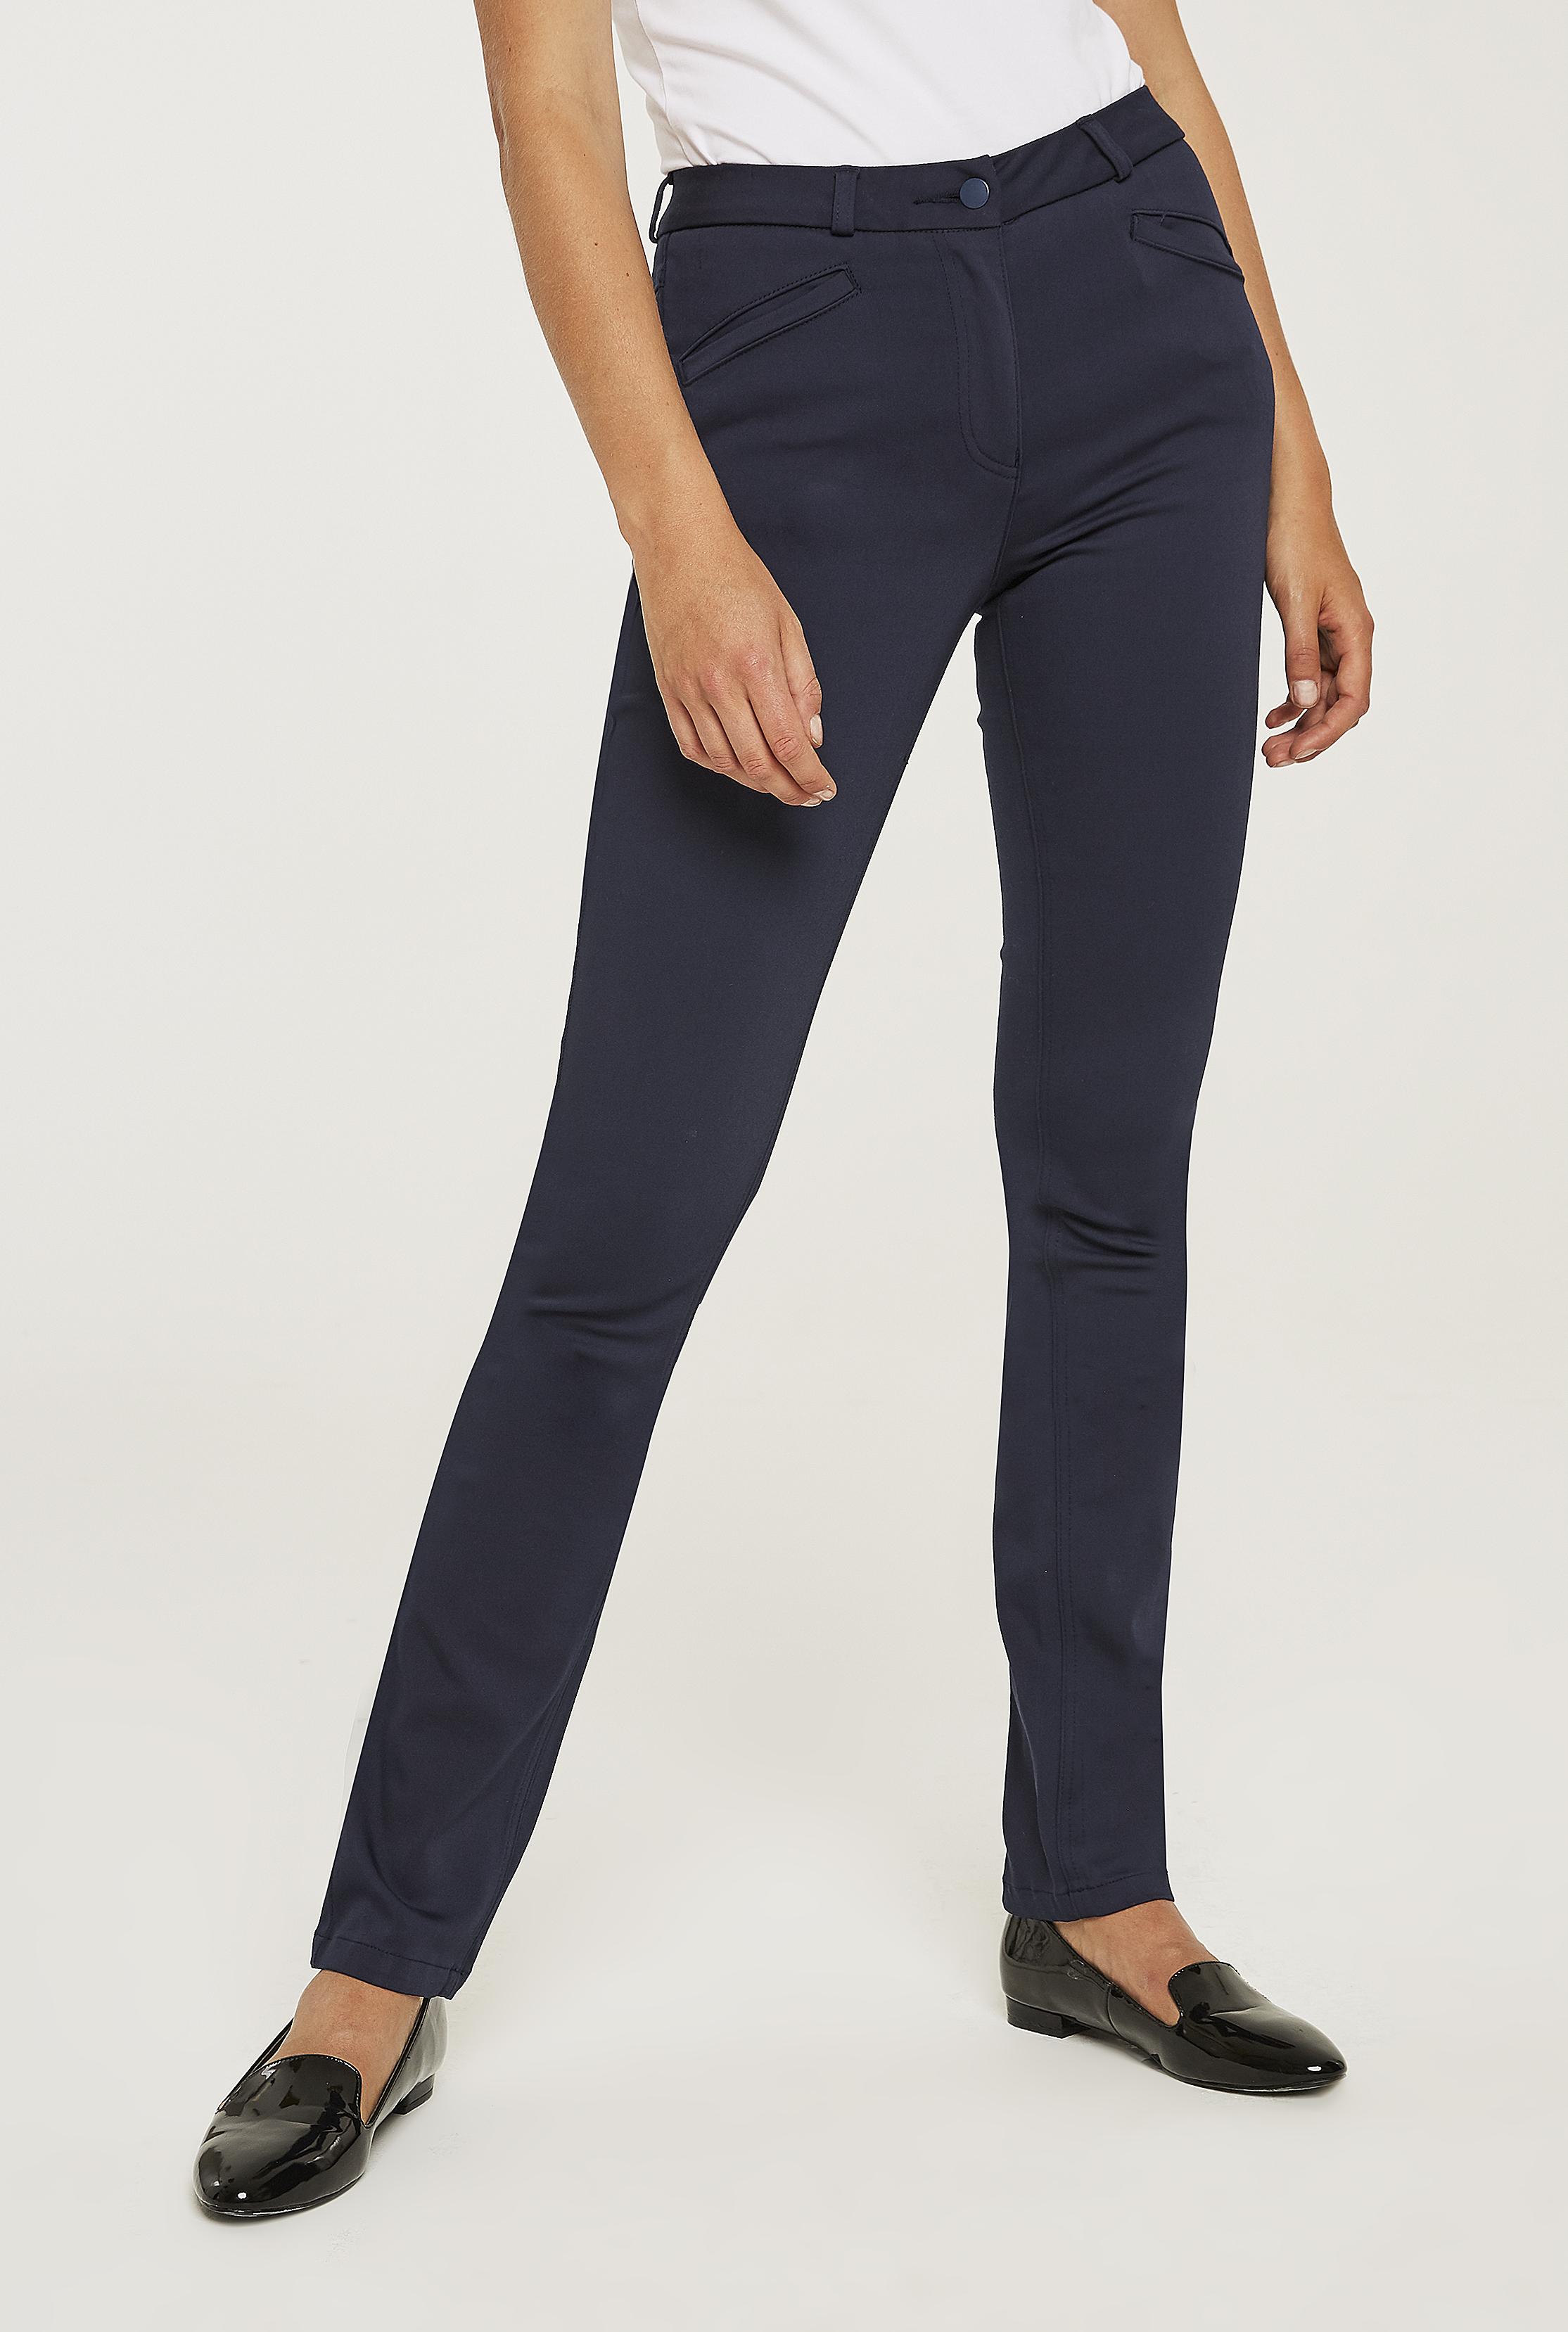 Smart Trouser Jean | Long Tall Sally